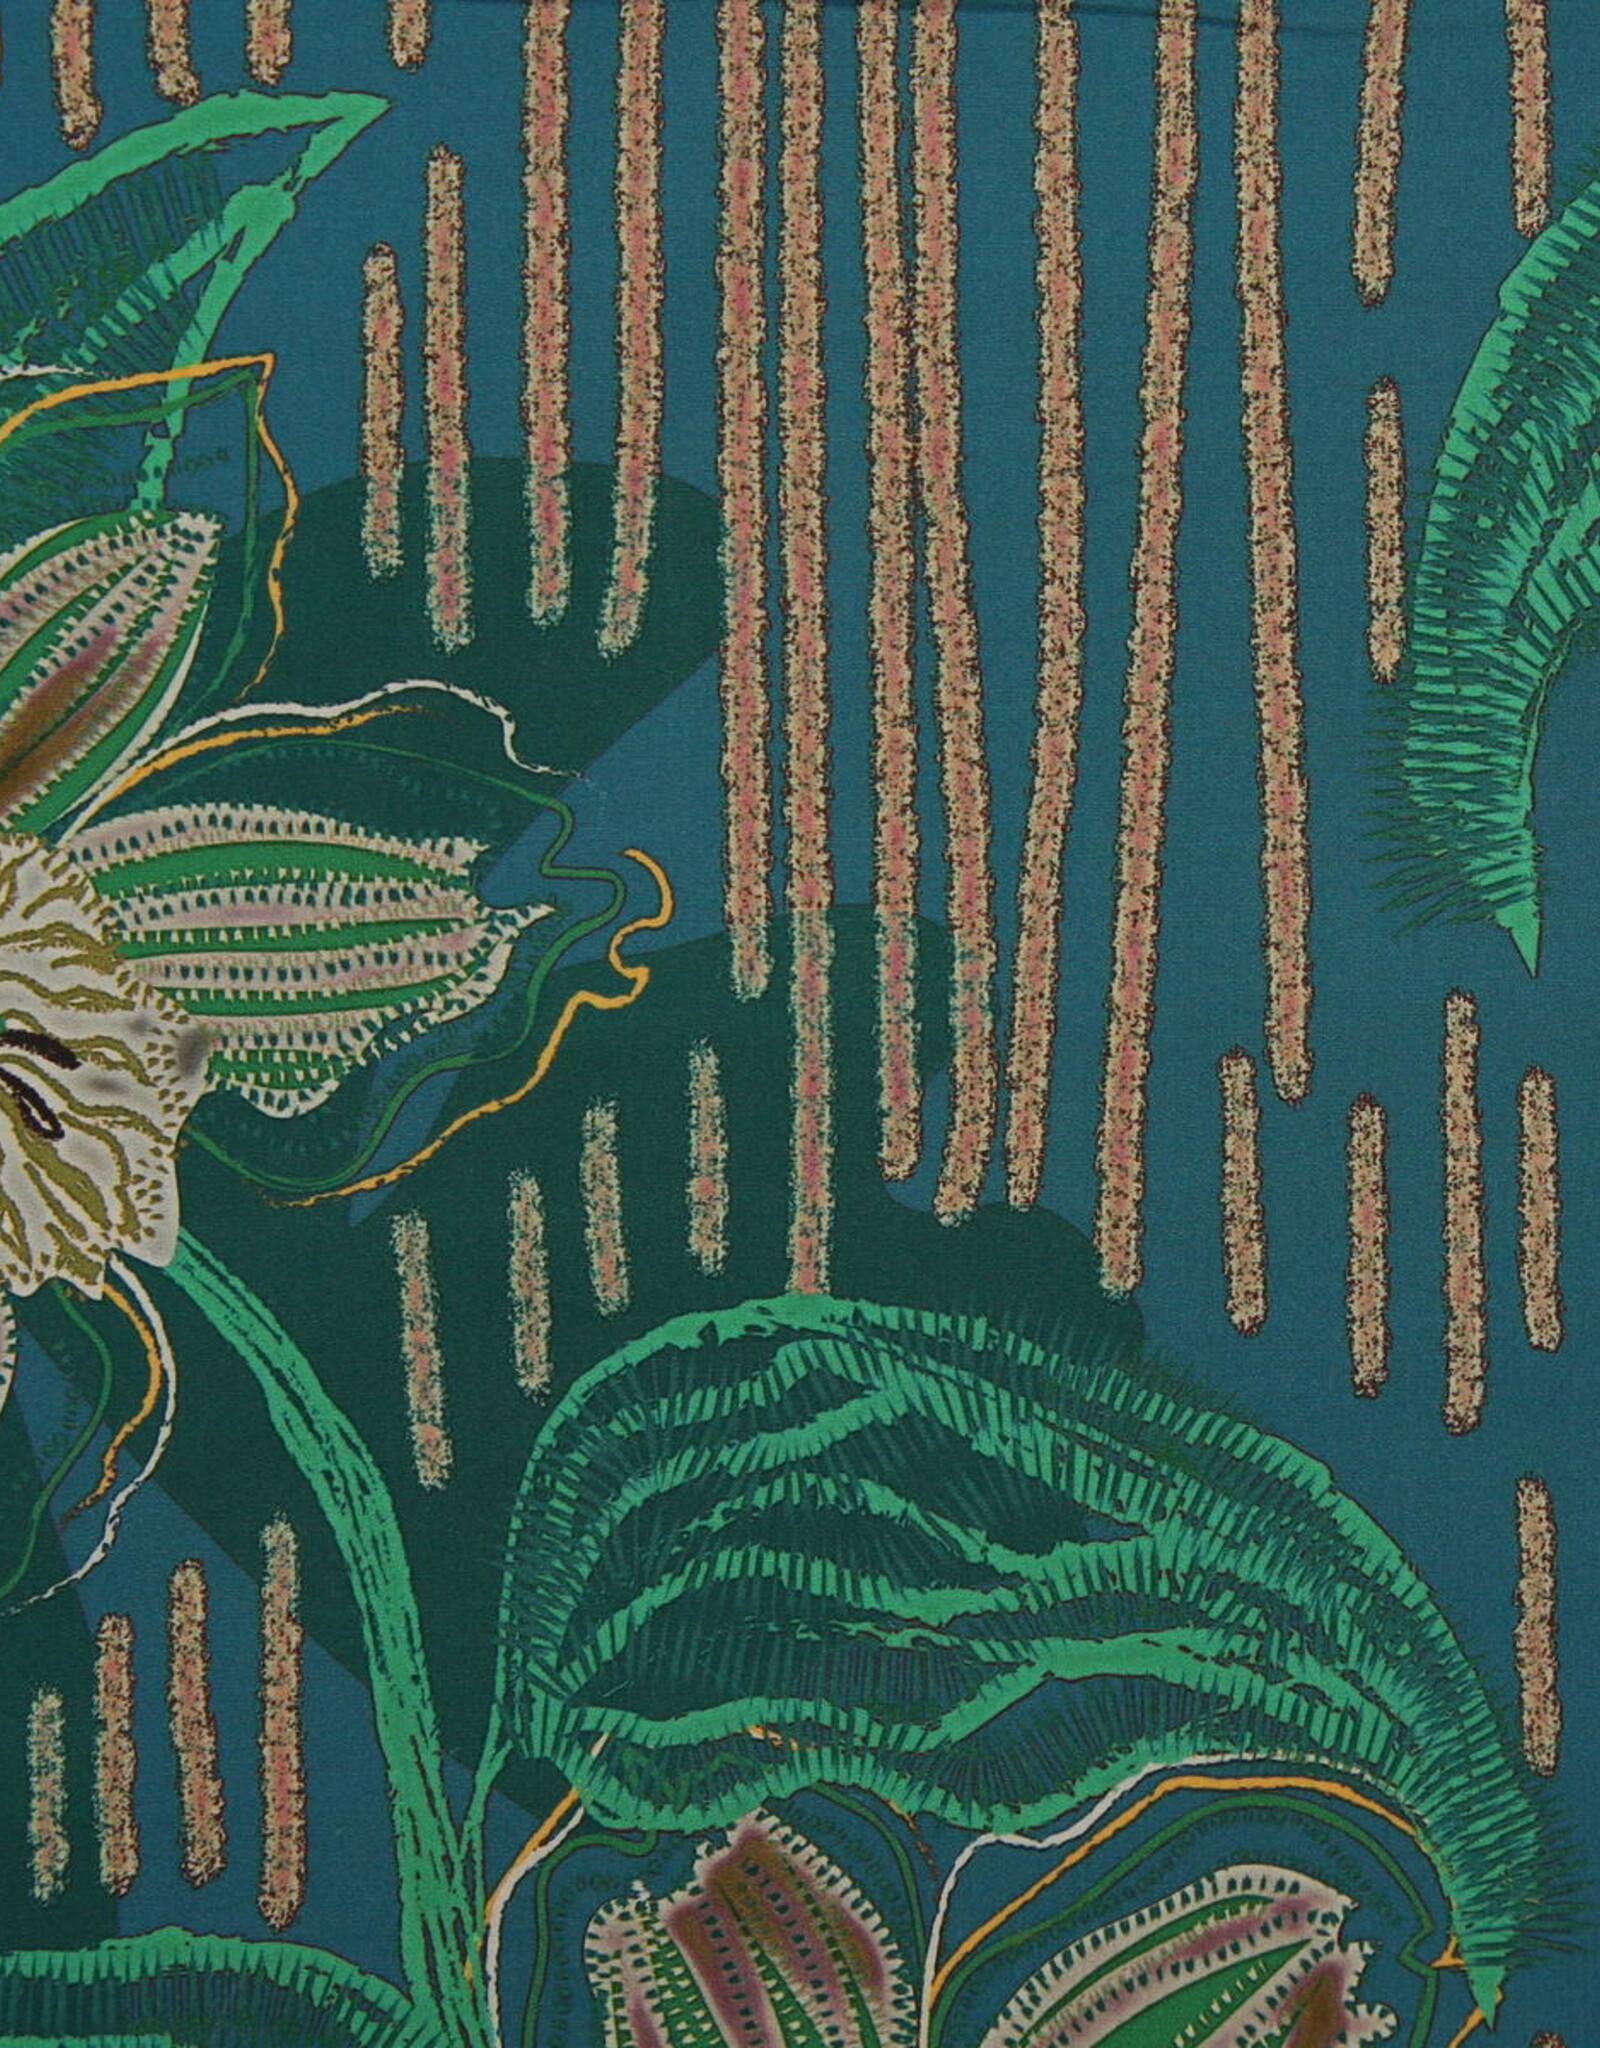 Marylène Madou Katoen Vertical Stripe / Flower - turquoise/groen